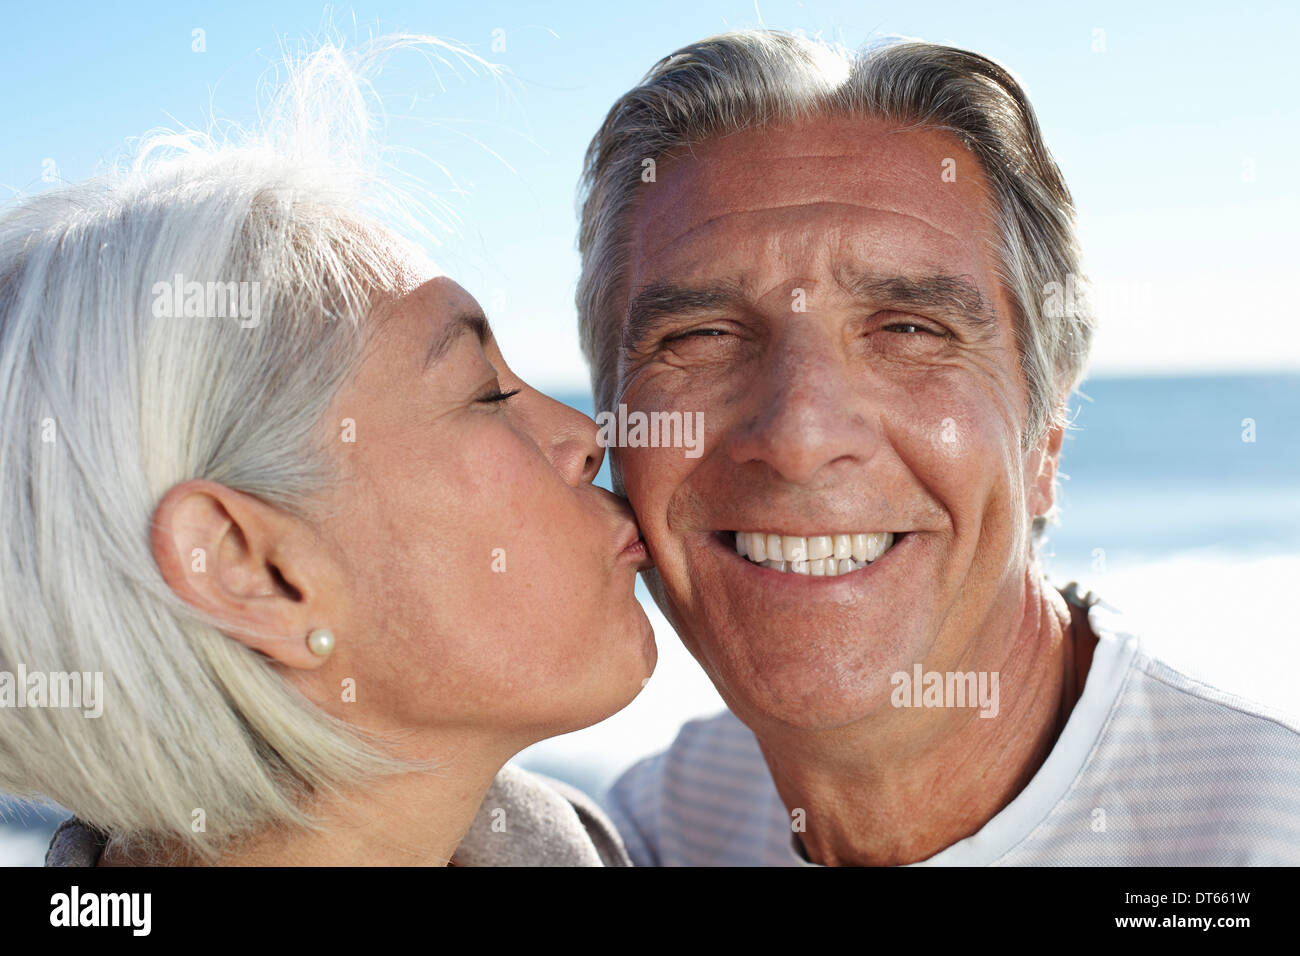 Woman pecking man on cheek Stock Photo